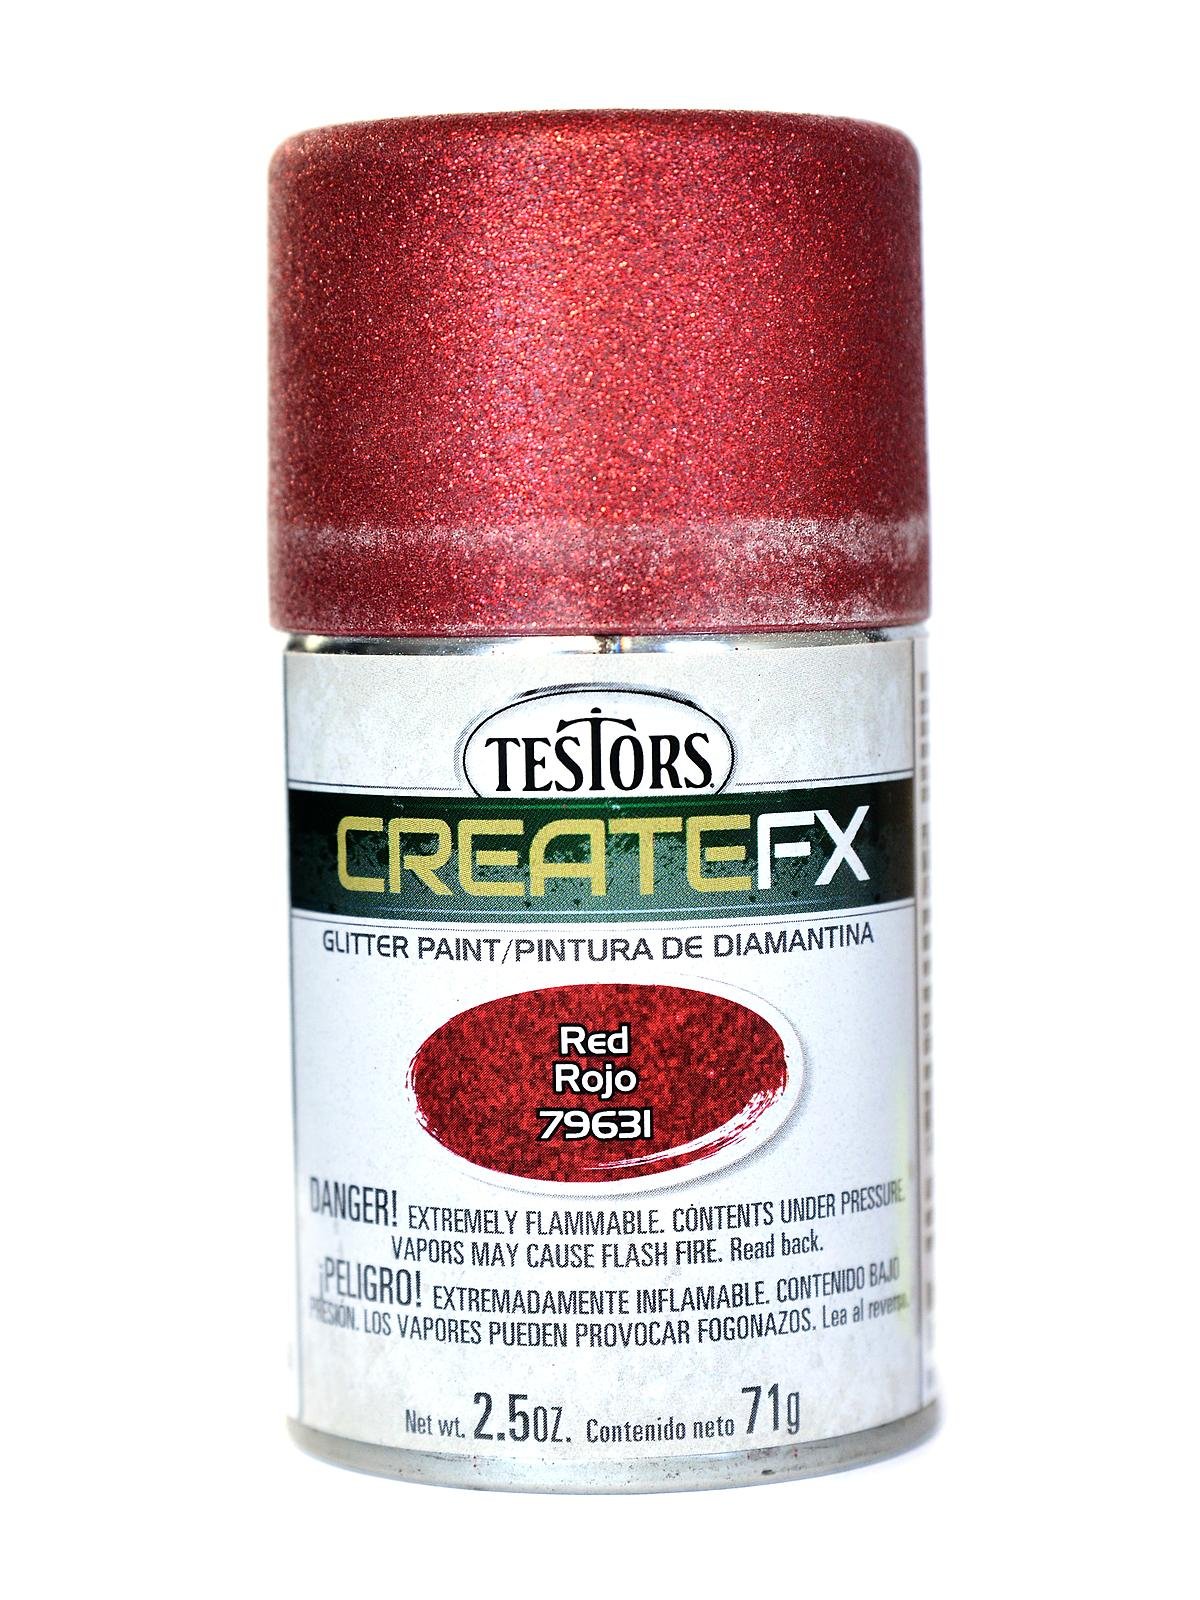 Testors CreateFX Specialty Sprays